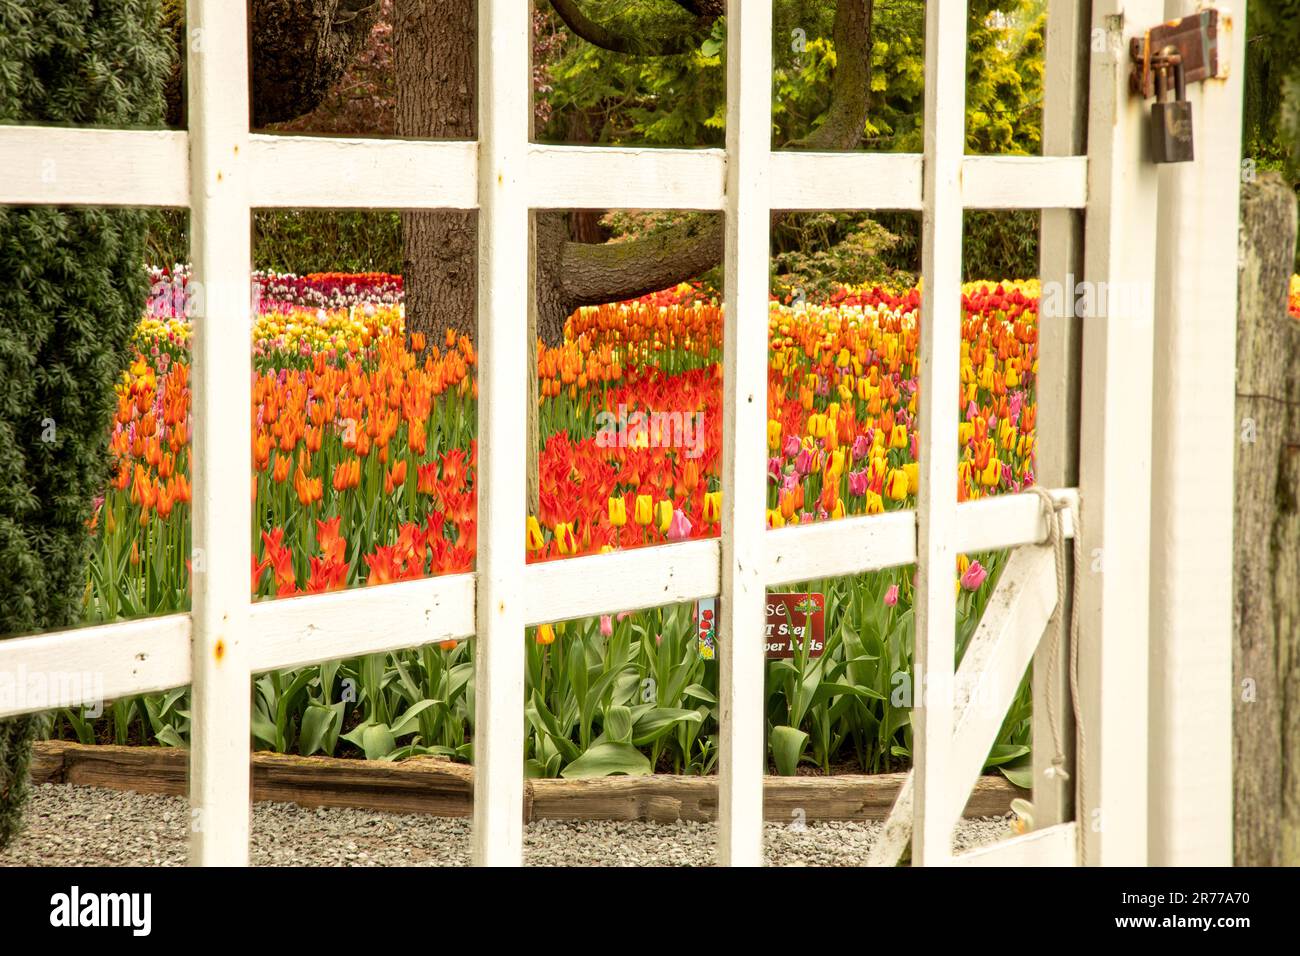 WA23389-00...WASHINGTON - Early morning viewing tulips through a locked gate at RoozenGaarde Tulip Garden. Stock Photo